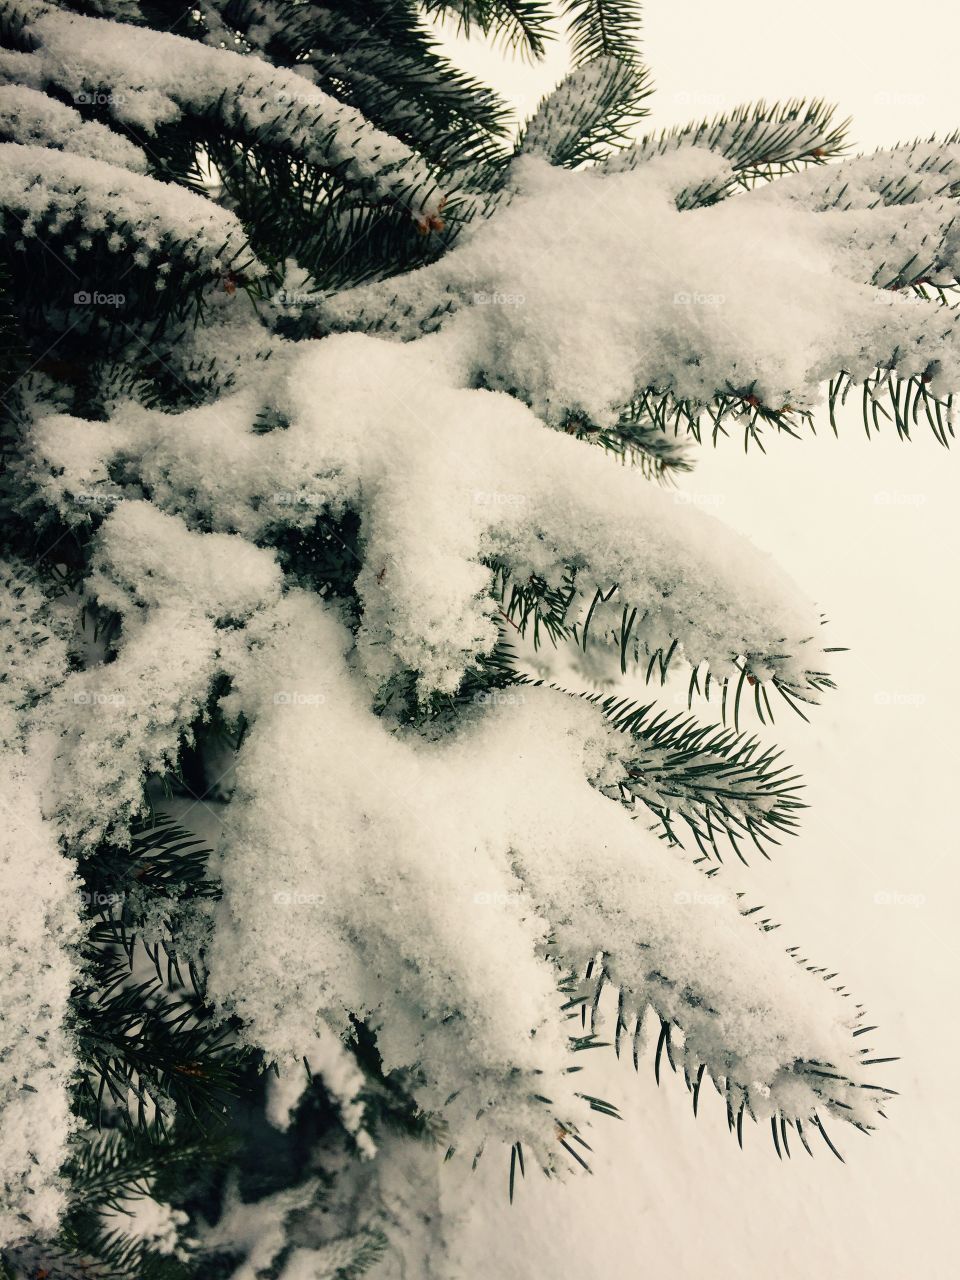 Snowy pine